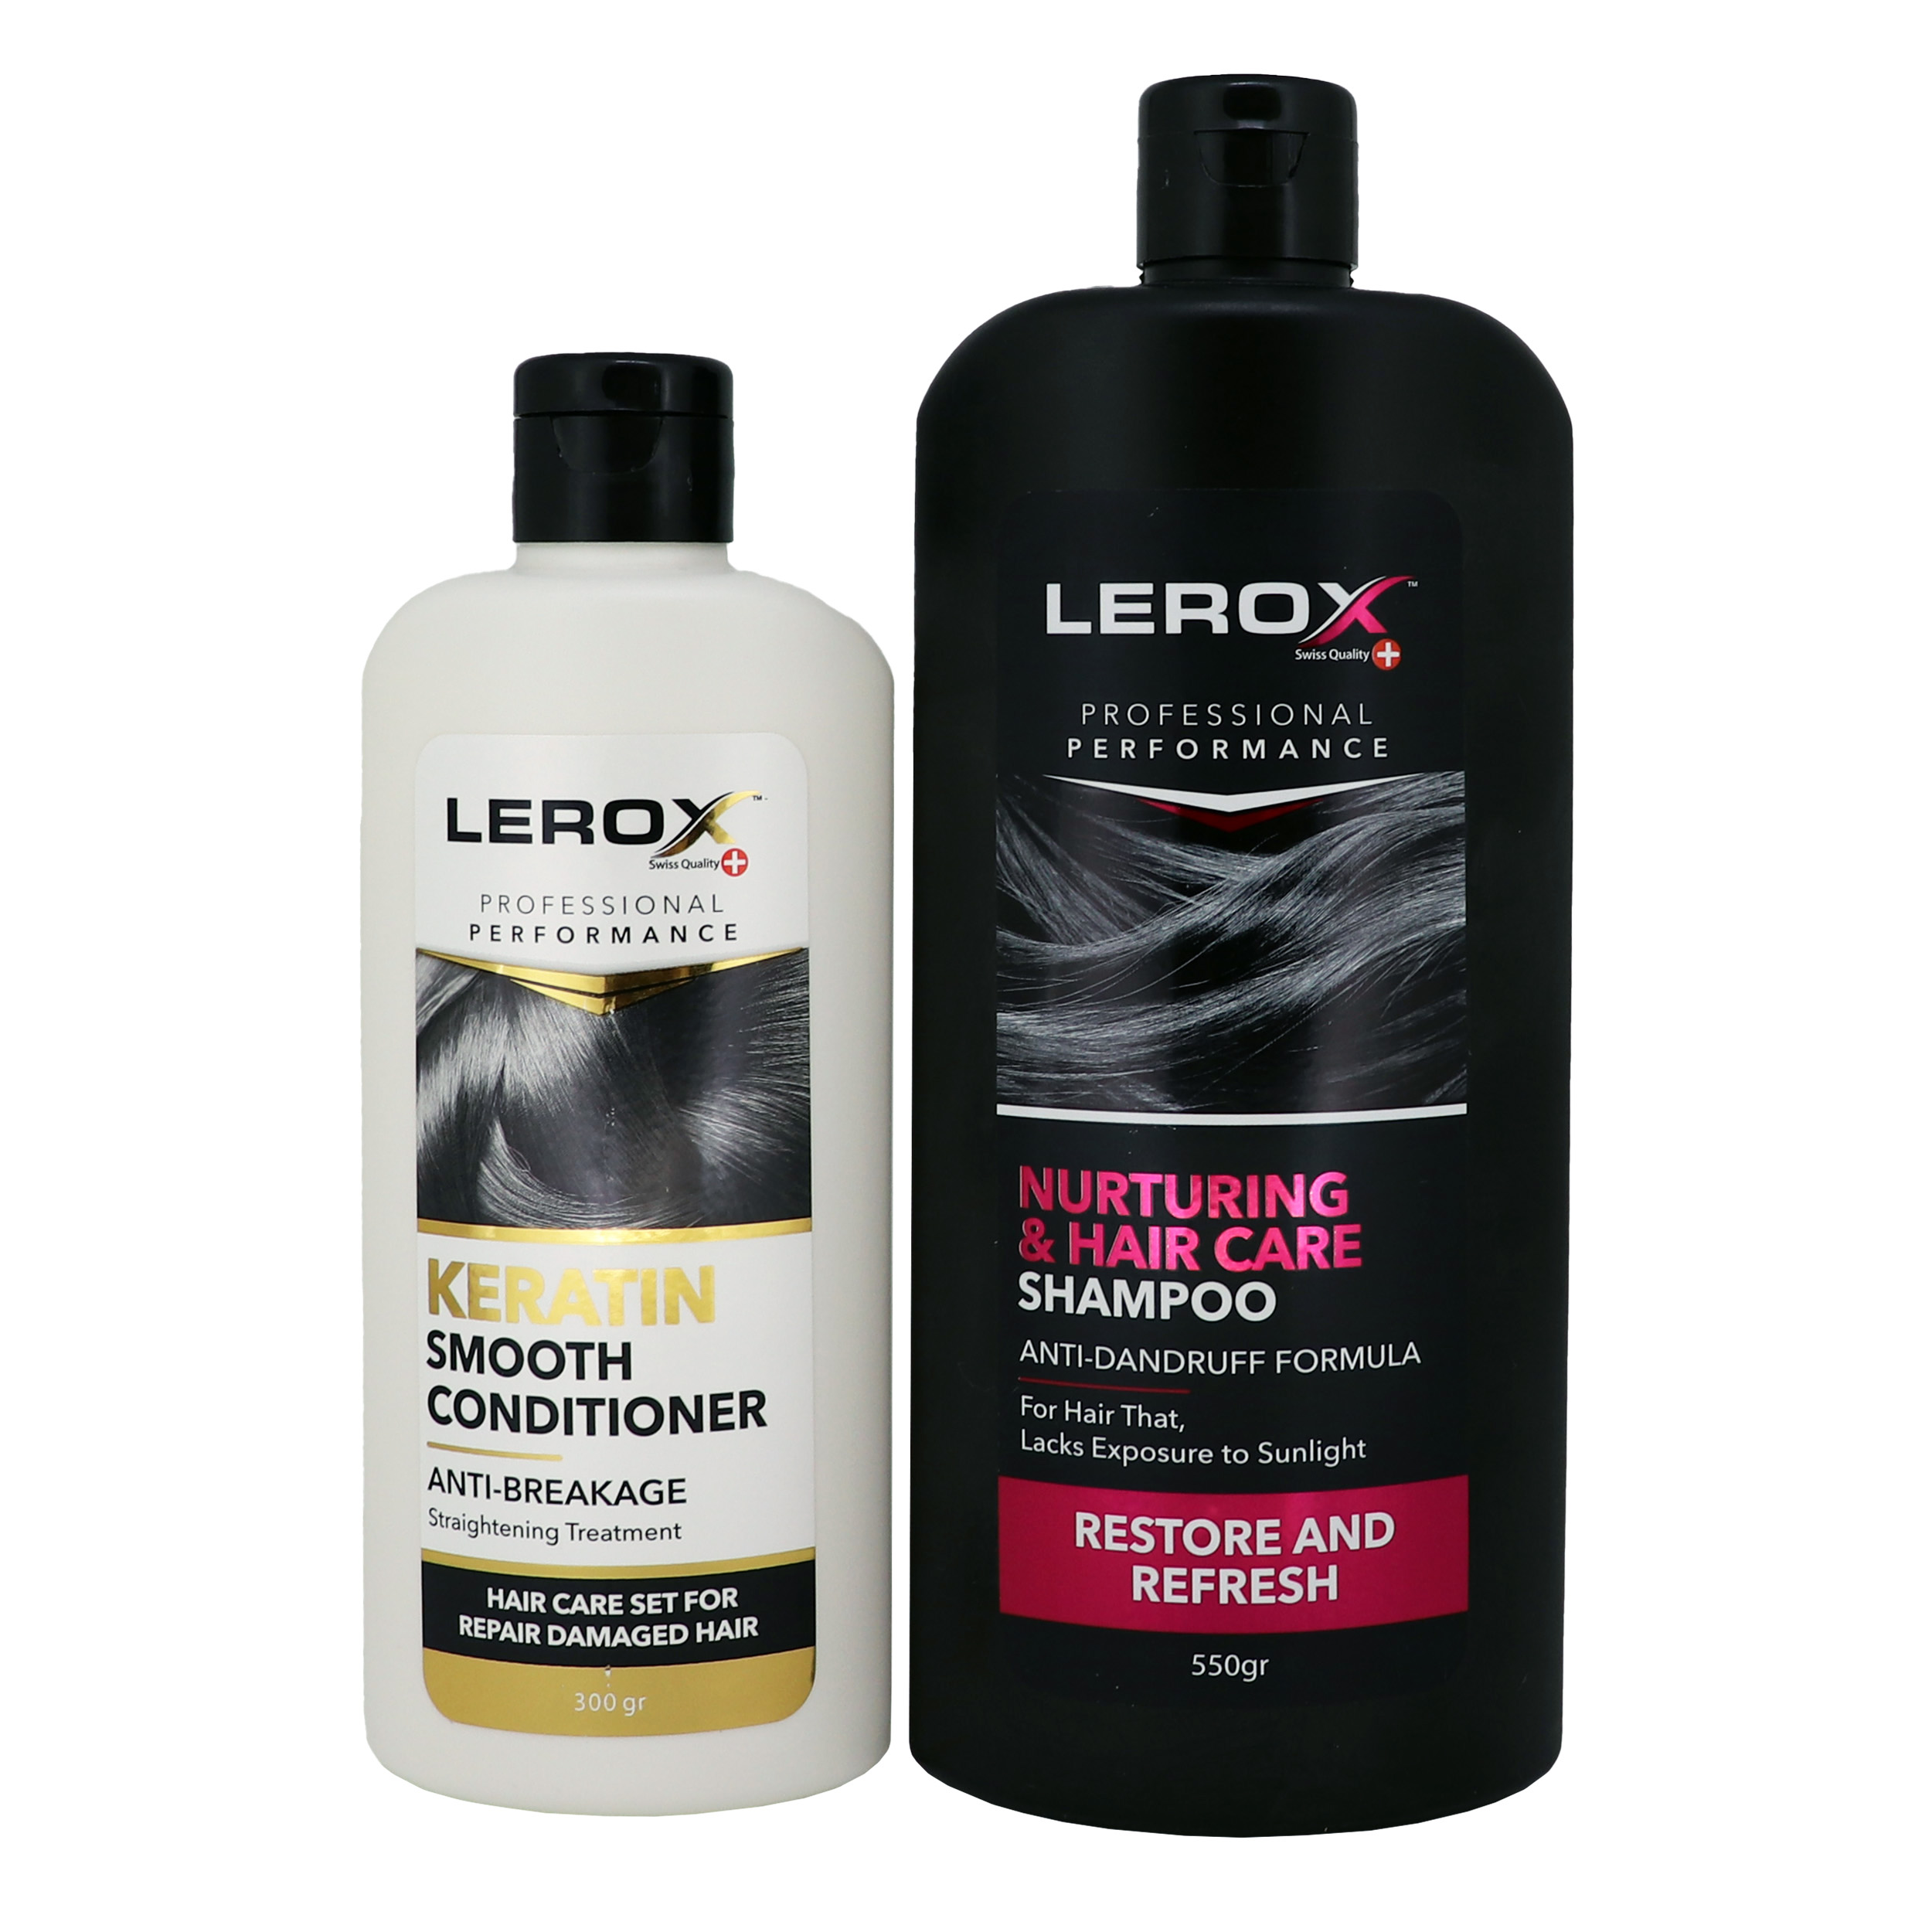 شامپو مو لروکس مدل Nurturing & Hair Care حجم 550 میلی لیتر به همراه نرم کننده مو لروکس مدل Keratin حجم 300 میلی لیتر